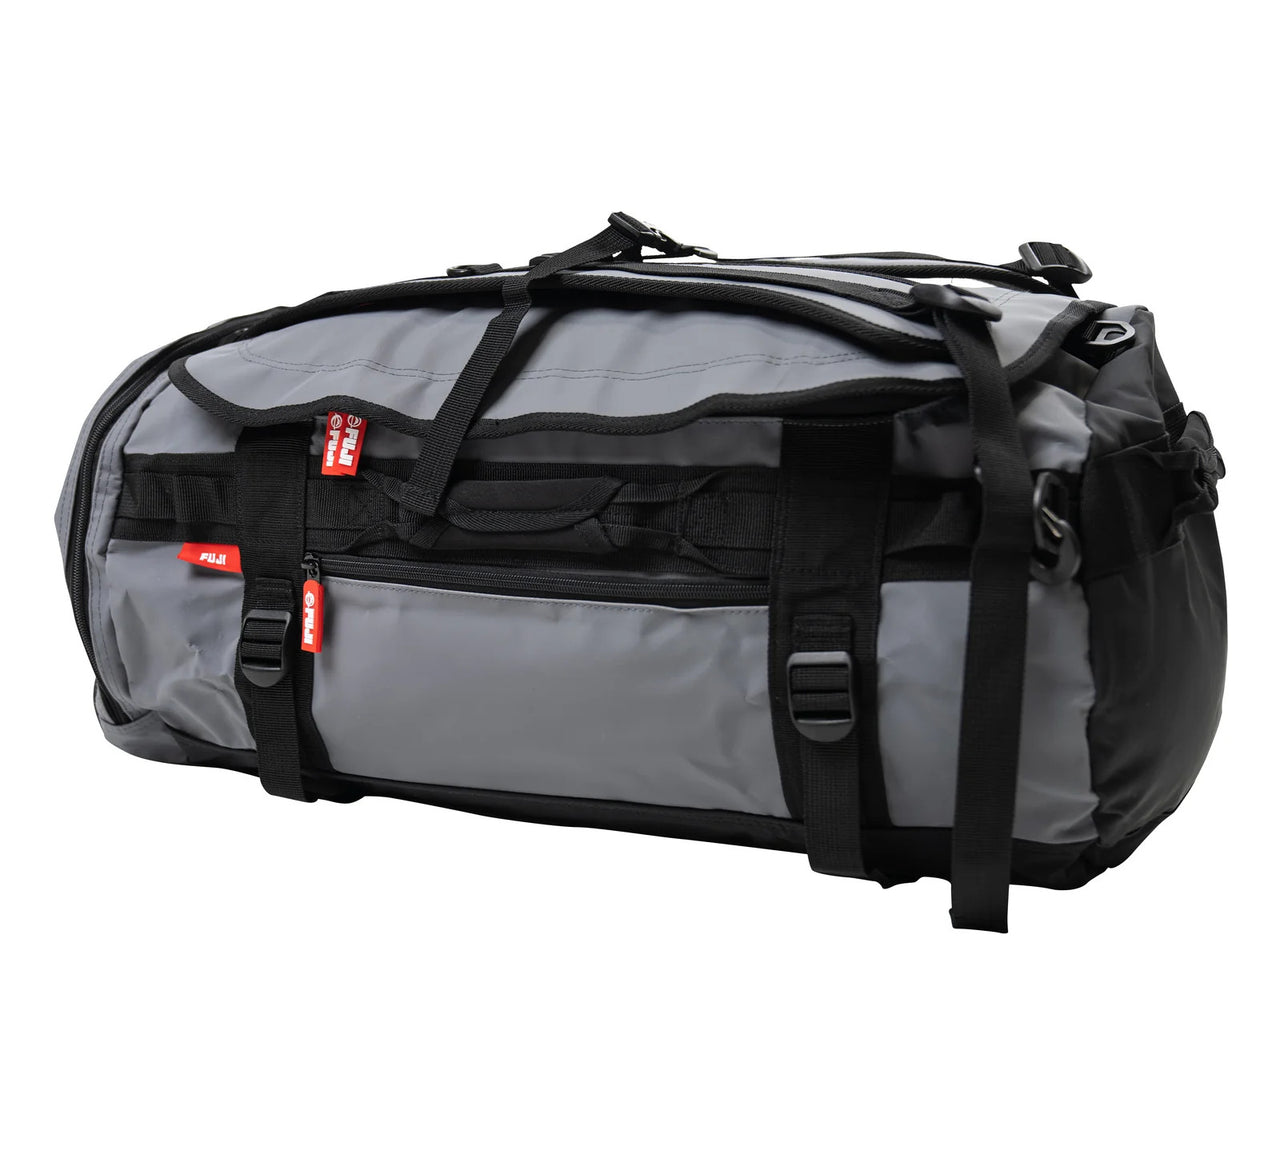 Fuji Comp Convertible Backpack Duffle - Grey/Black